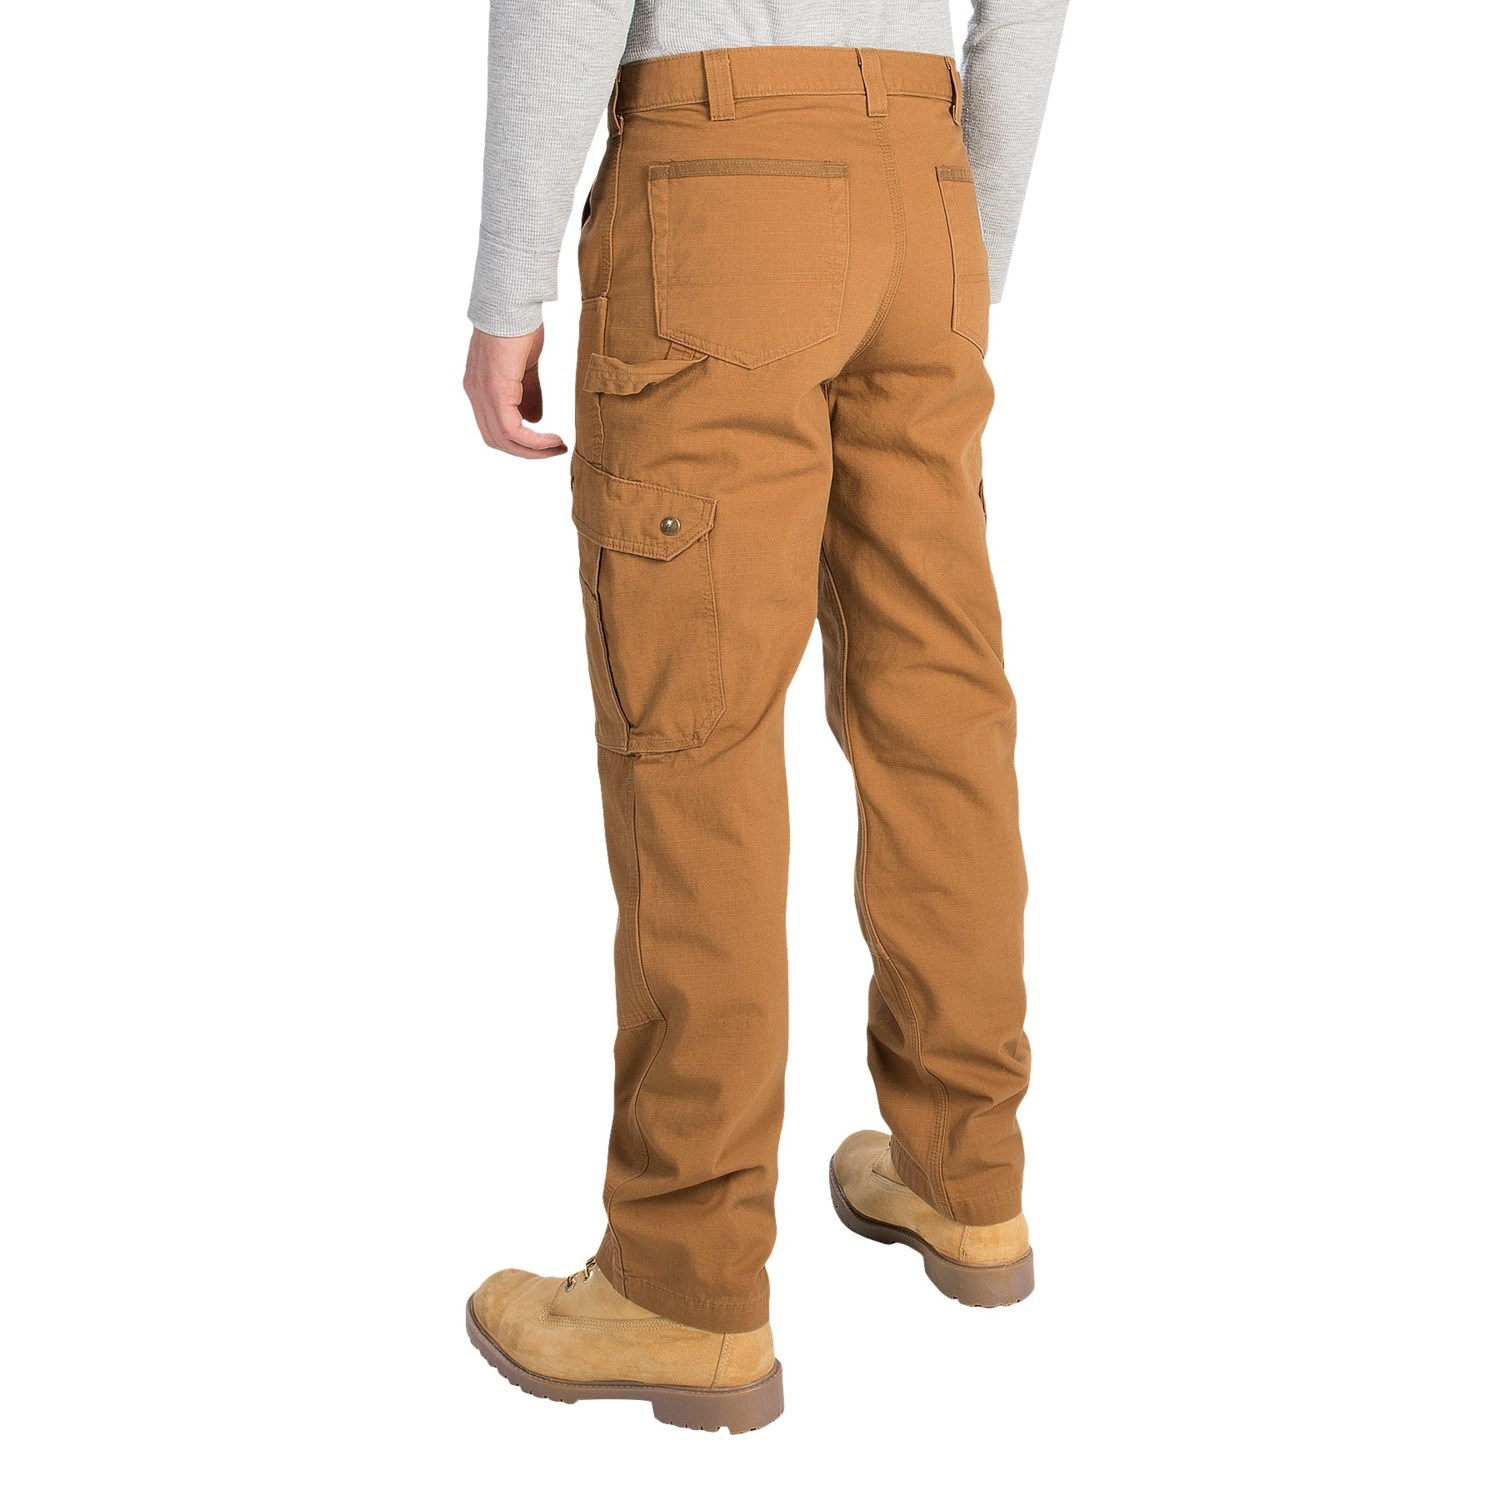 Carhartt Cotton Ripstop Pants (For Men)